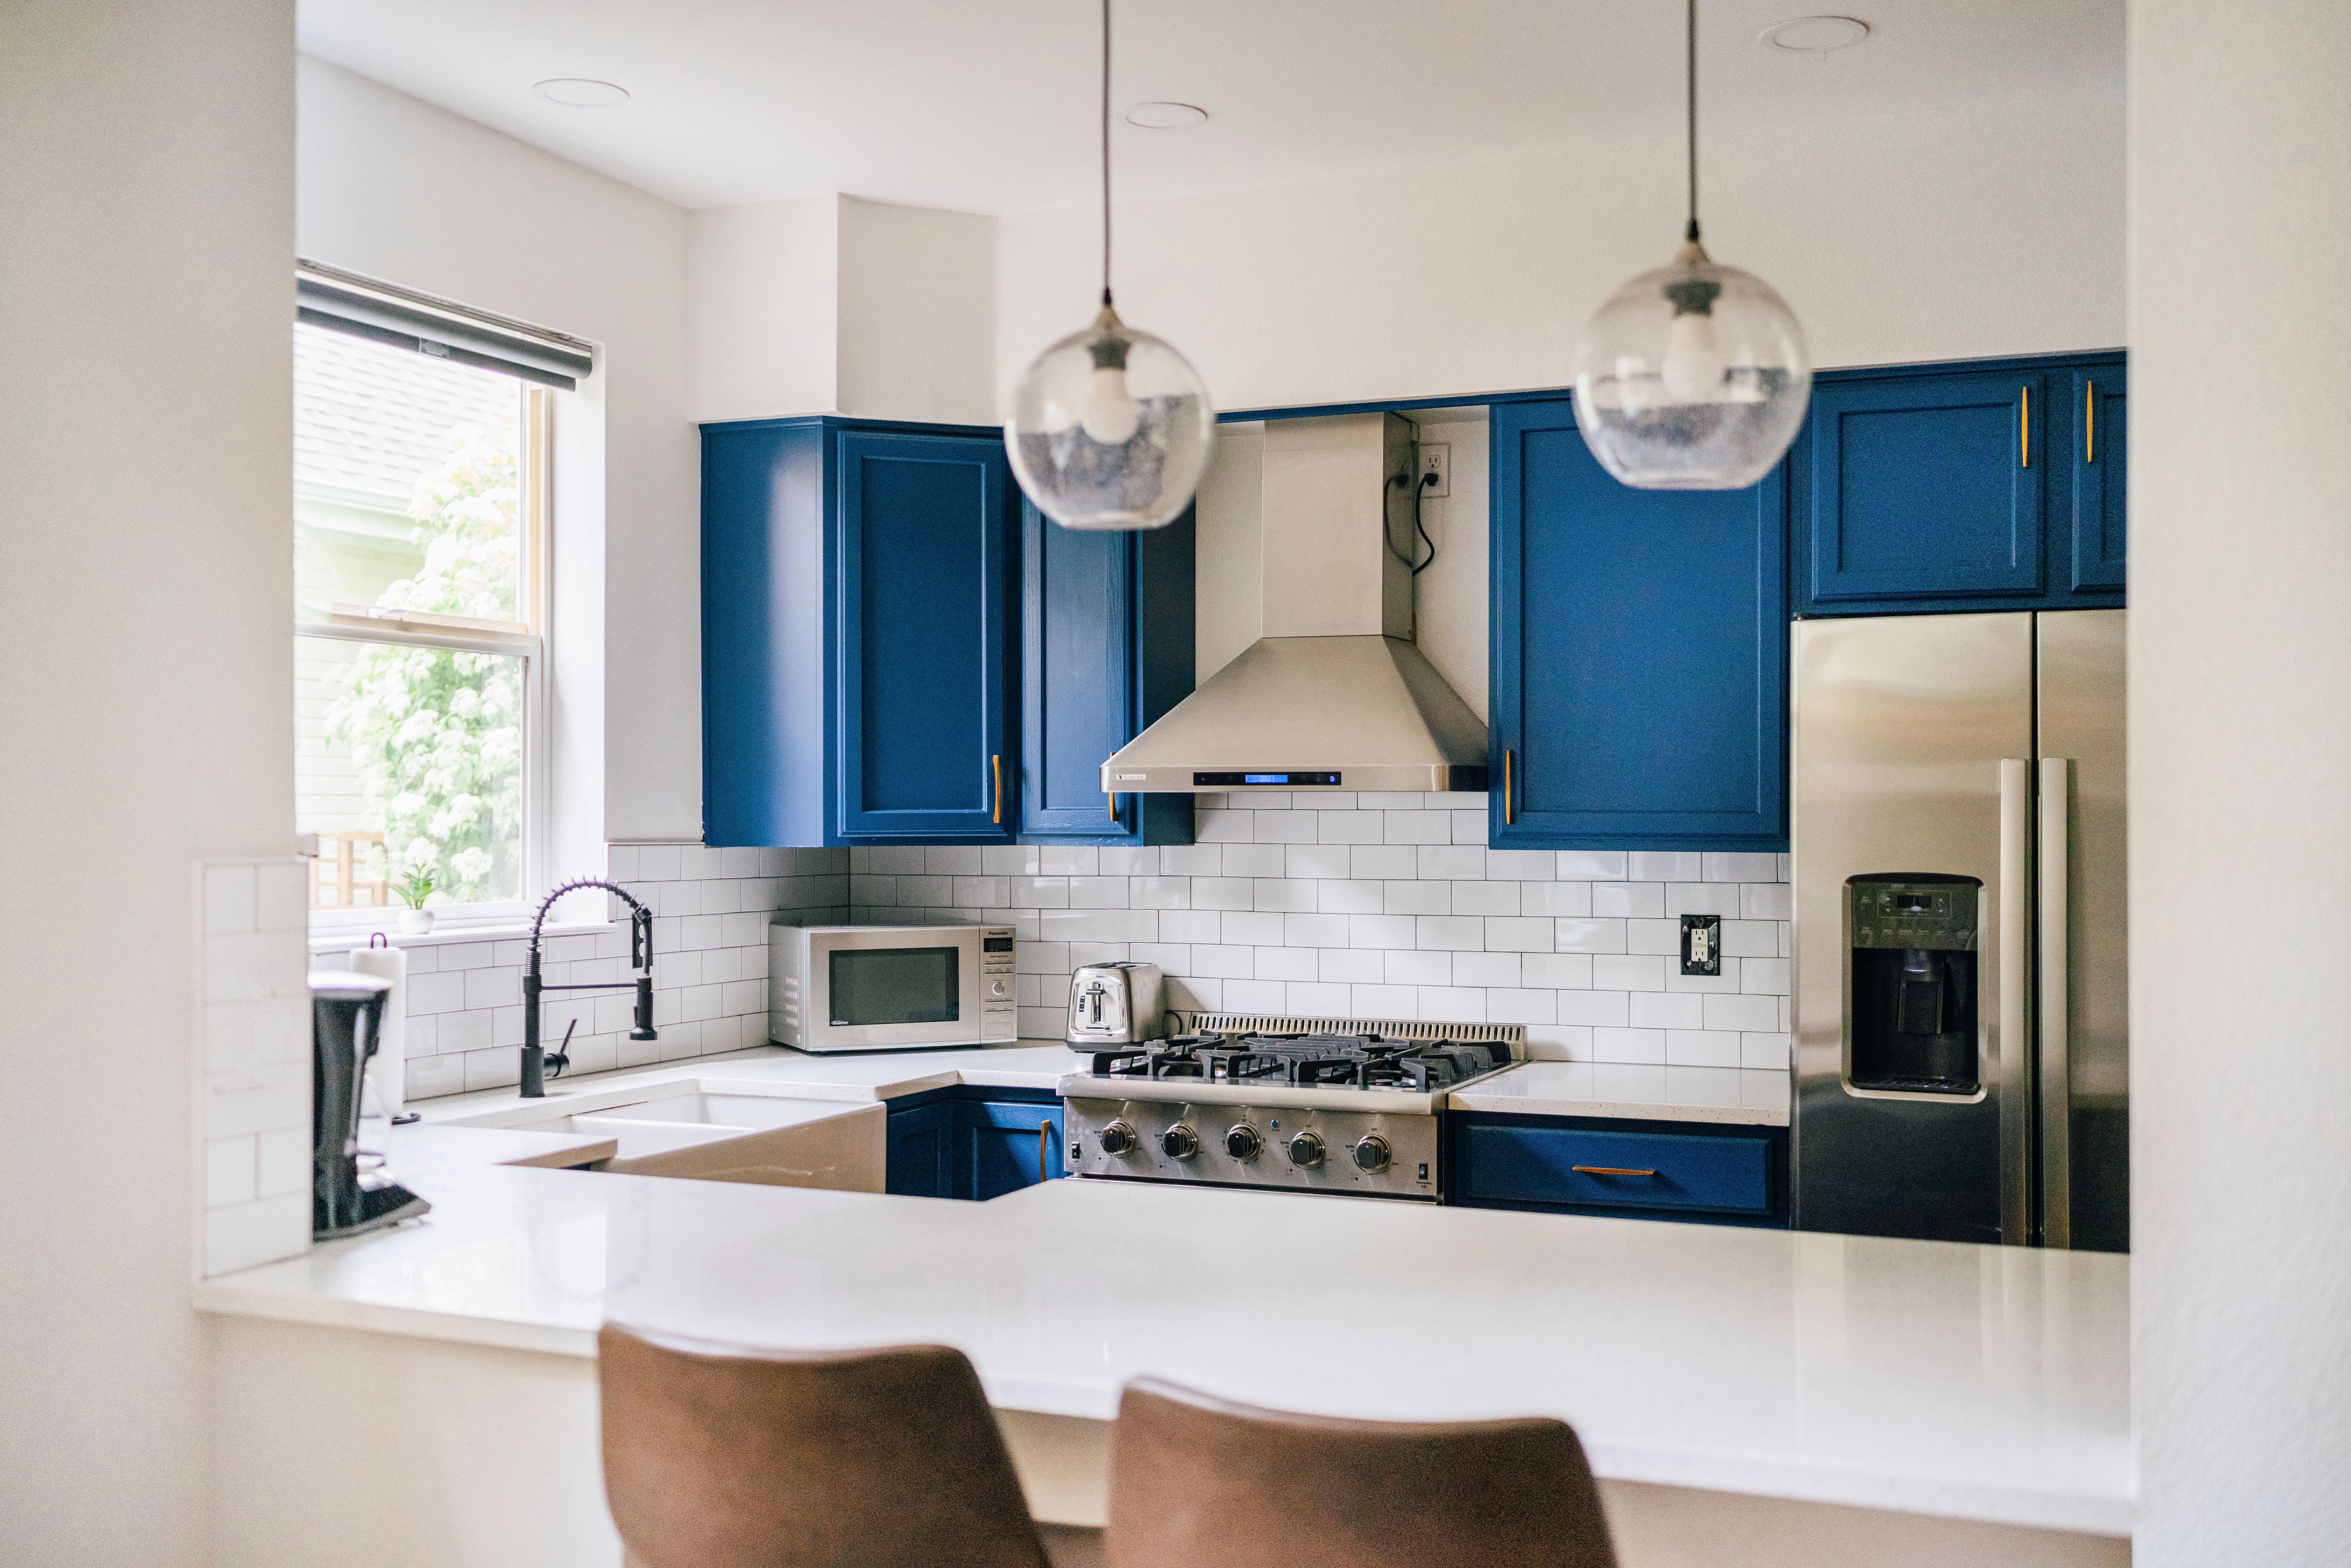 Modern farmhouse kitchen with bar wall design, cobalt blue cabinets, white walls and backsplash.